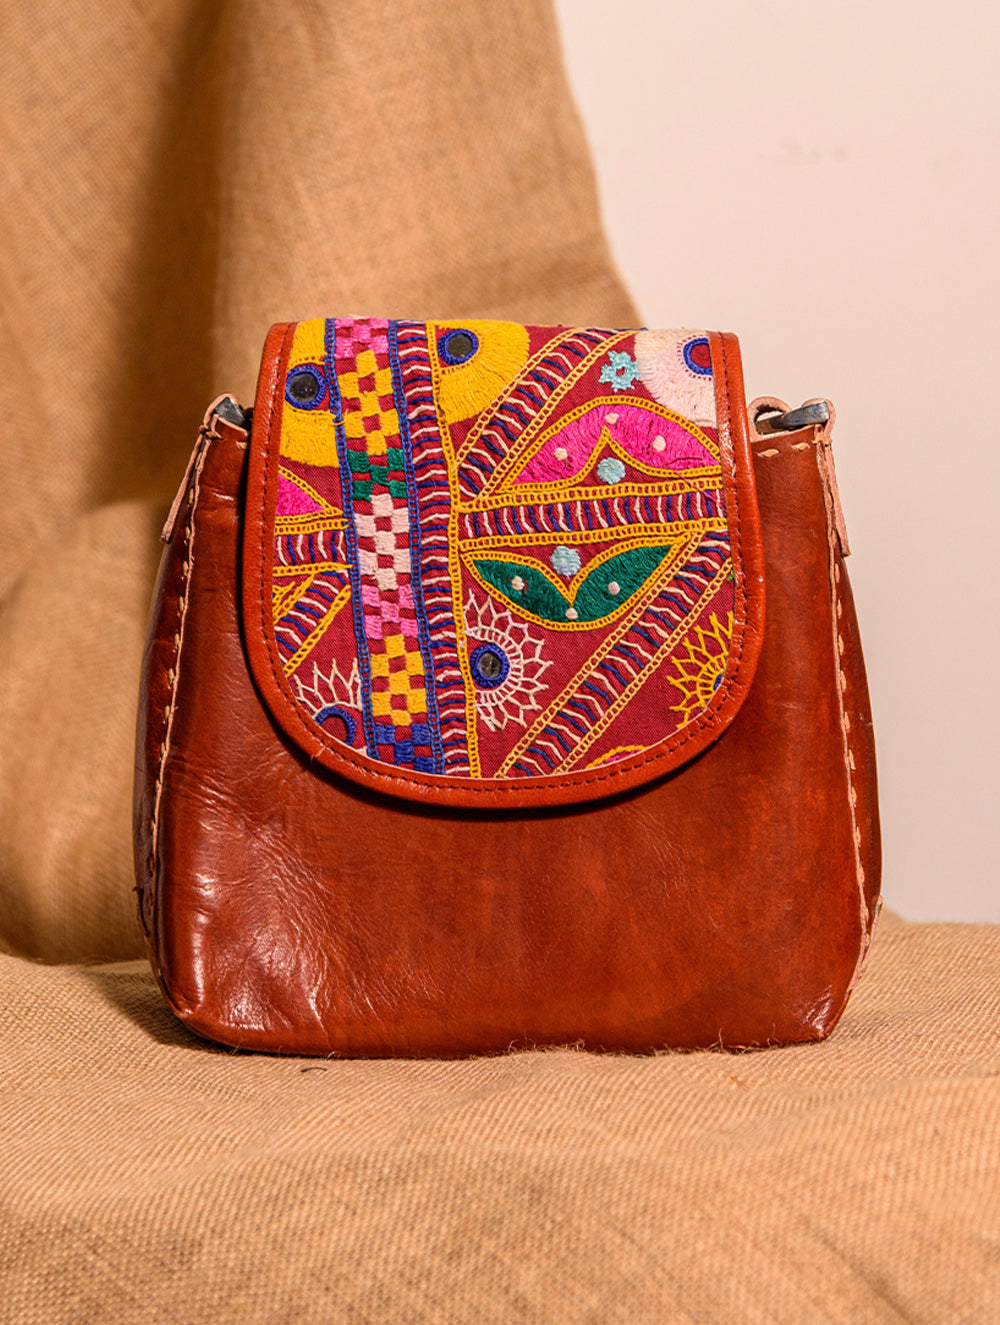 Buy Leather Handbags for Women Shoulder Large Ladies Purse Satchel Tote Bag  Crossbody Bag (Brown) at Amazon.in